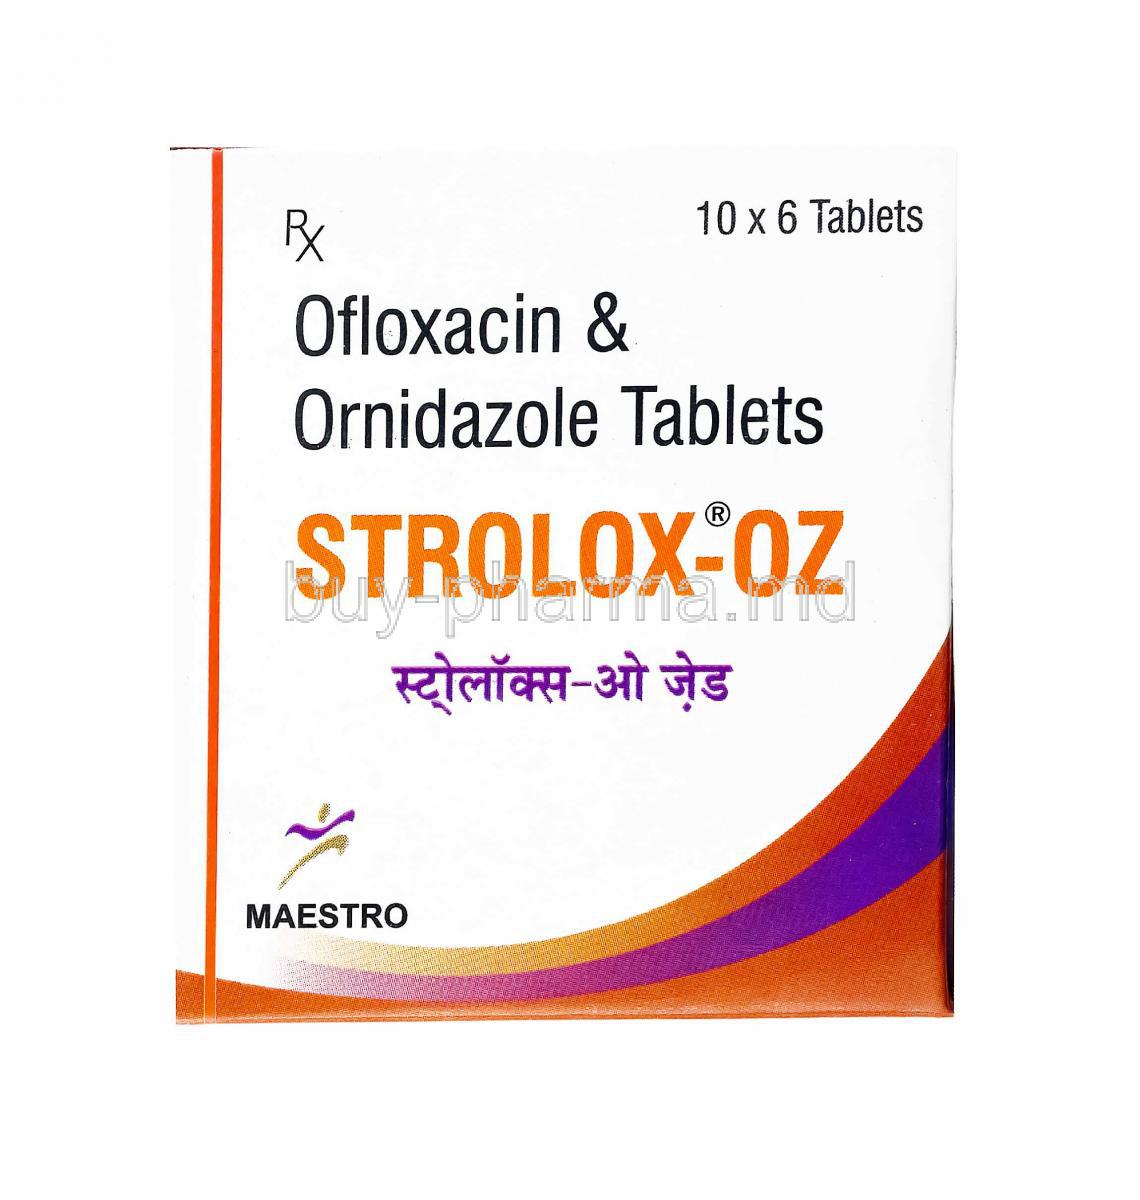 Strox OZ, Ofloxacin and Ornidazole